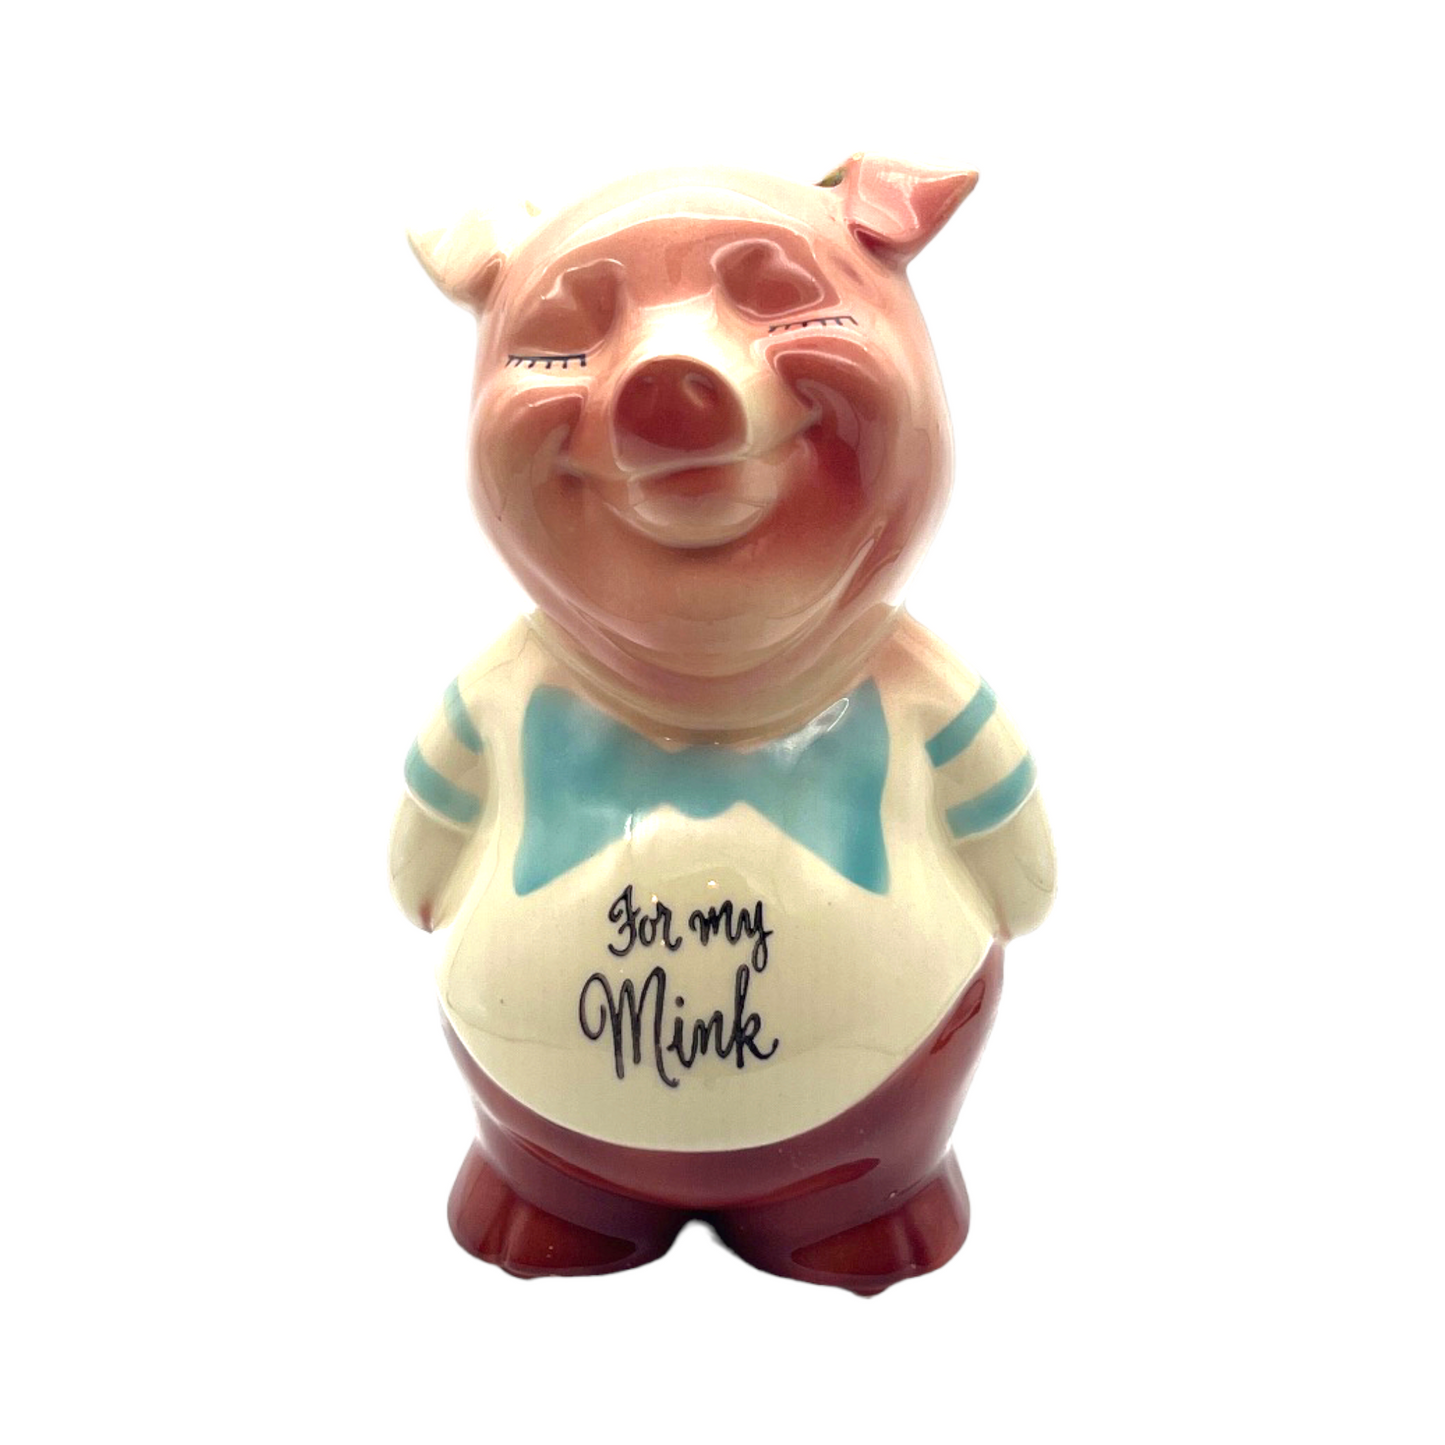 Royal Copley - Pig Piggy Bank - Vintage - 8"